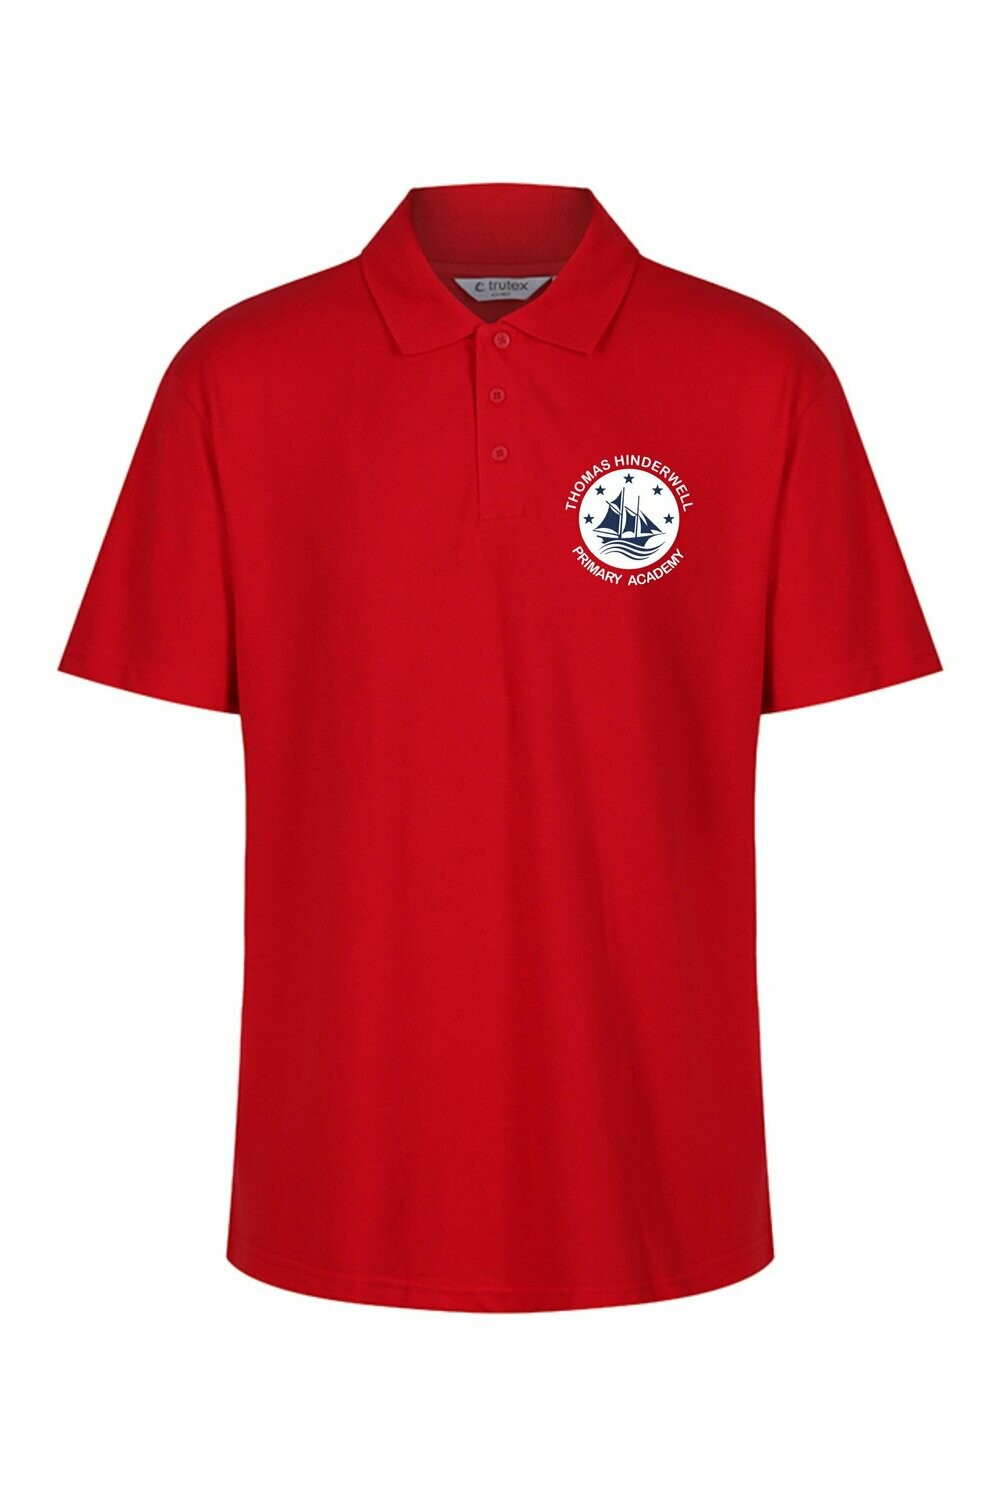 Hinderwell School Red PE Polo Shirt